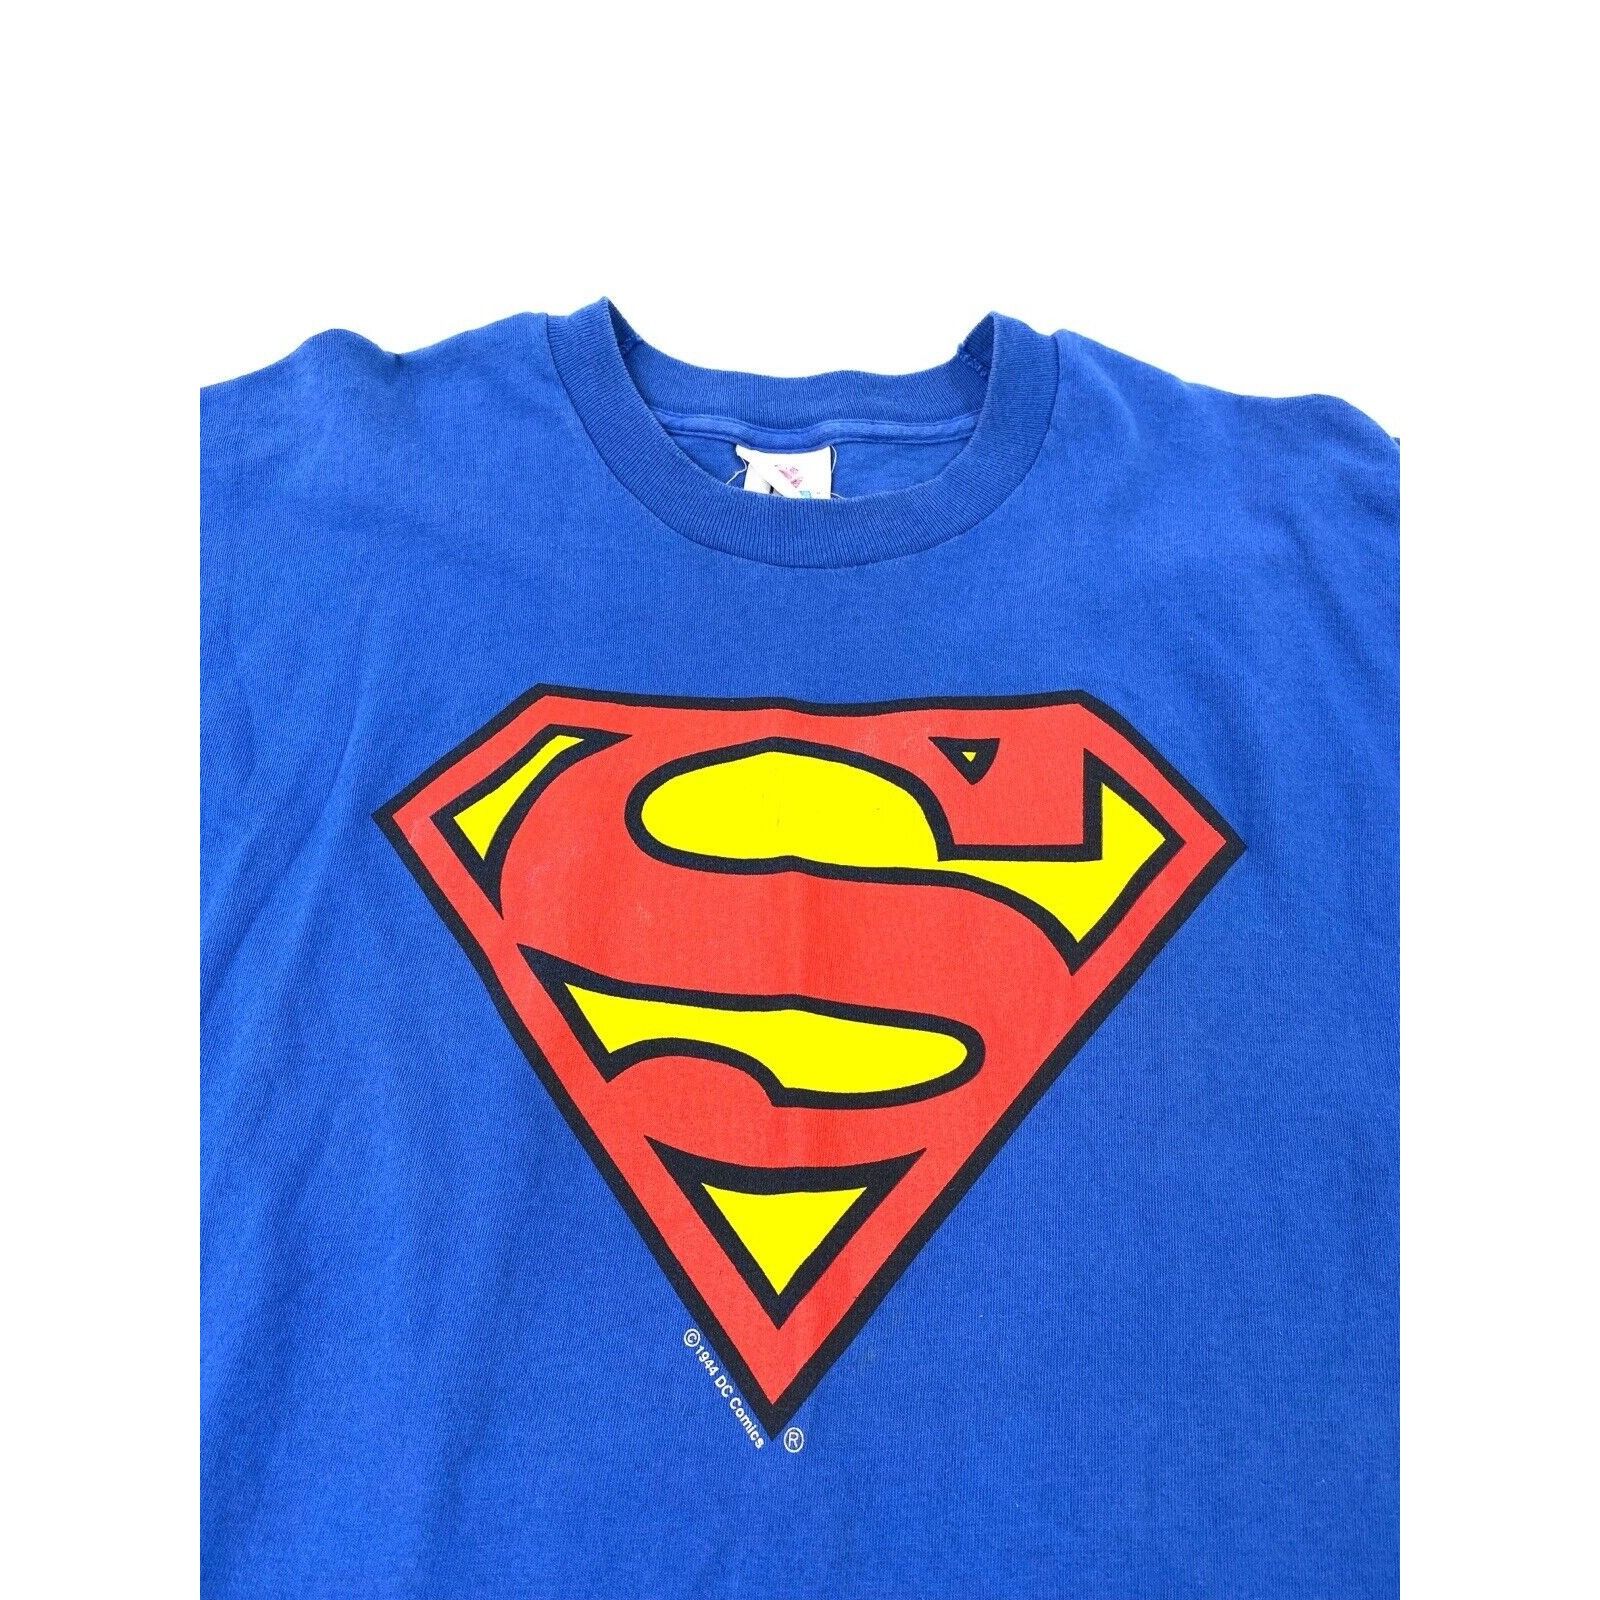 Dc Comics Vintage Superman Shirt Mens XL Blue DC Comics Big Chest Logo Size US XL / EU 56 / 4 - 2 Preview